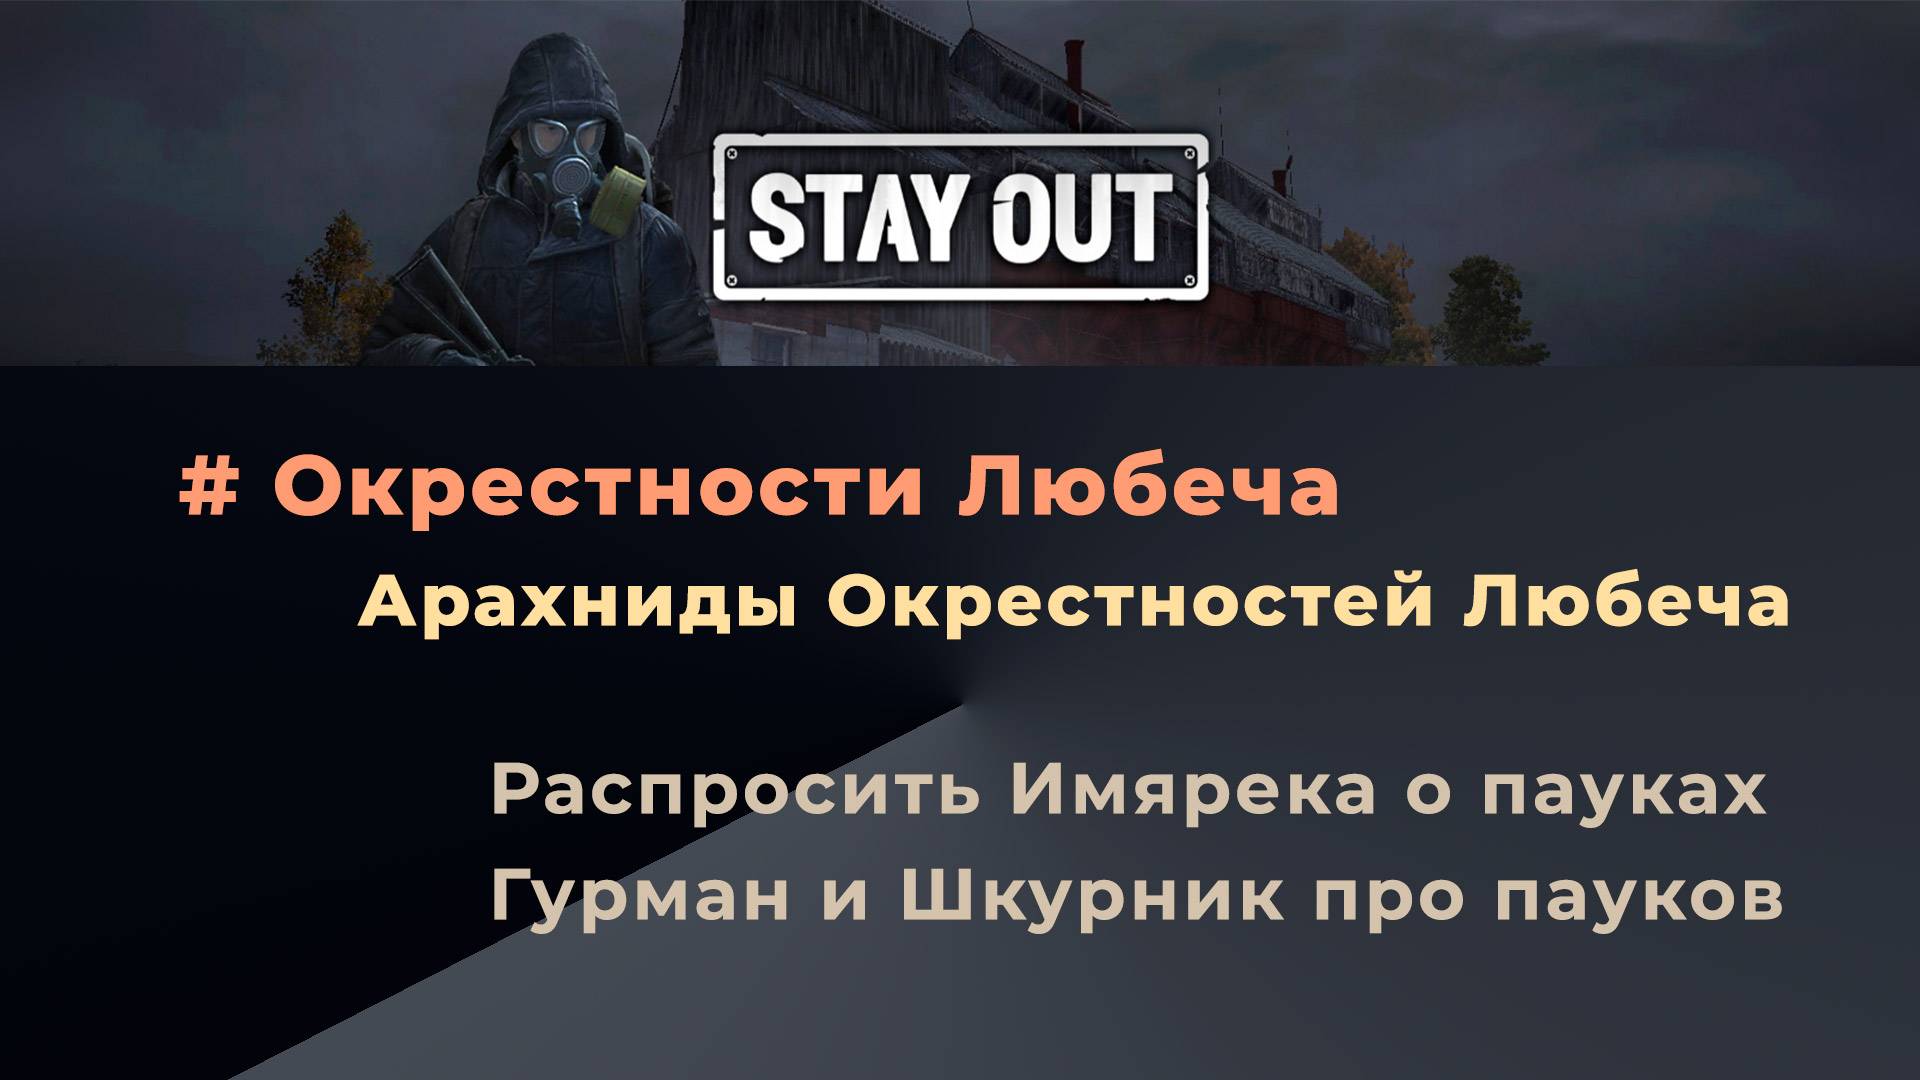 Stay Out_Арахниды Окрестностей Любеча